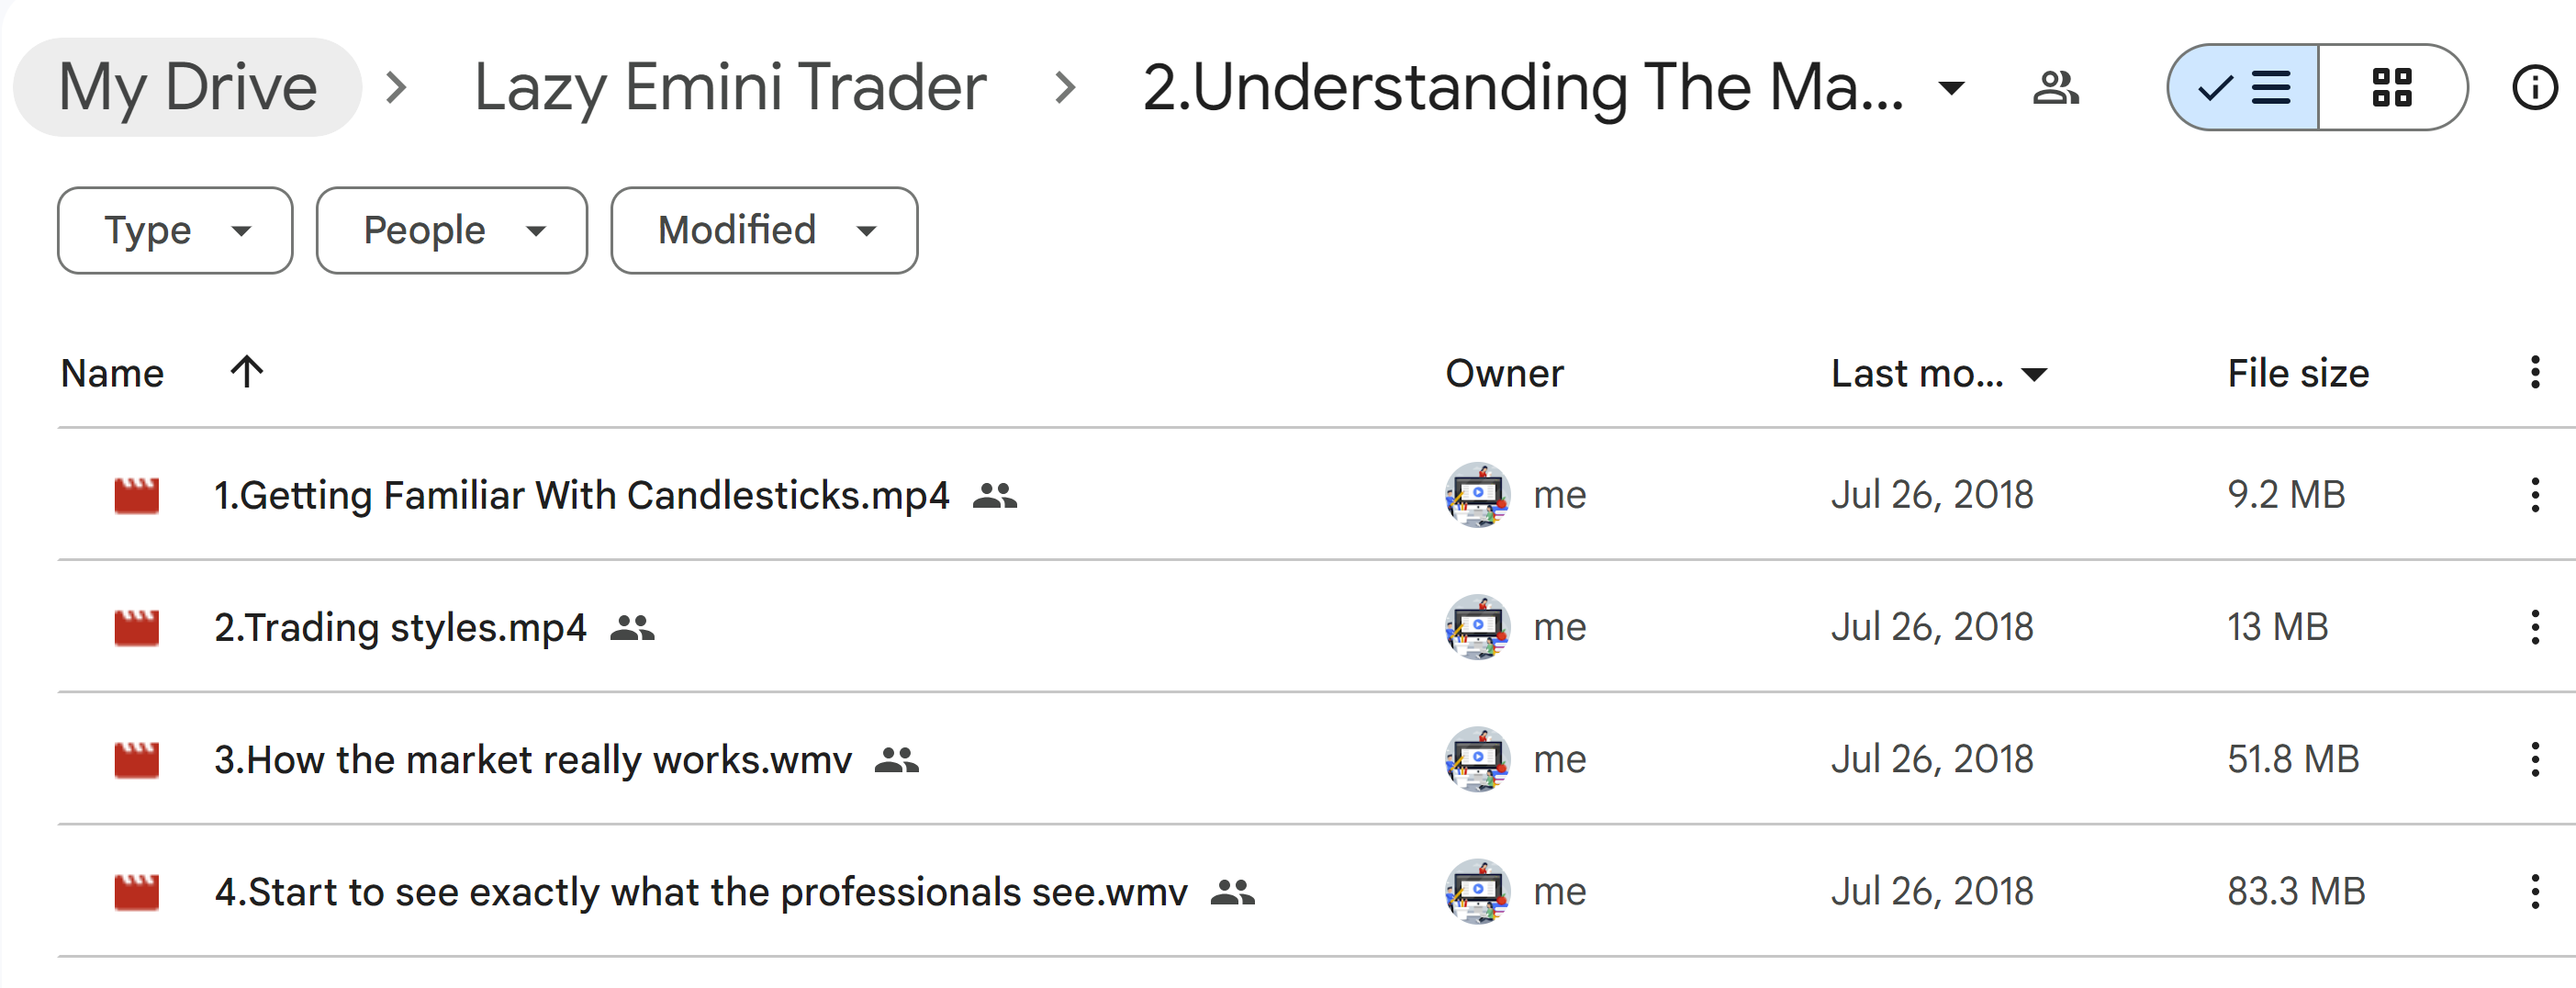 Lazy Emini Trader Understand The Market